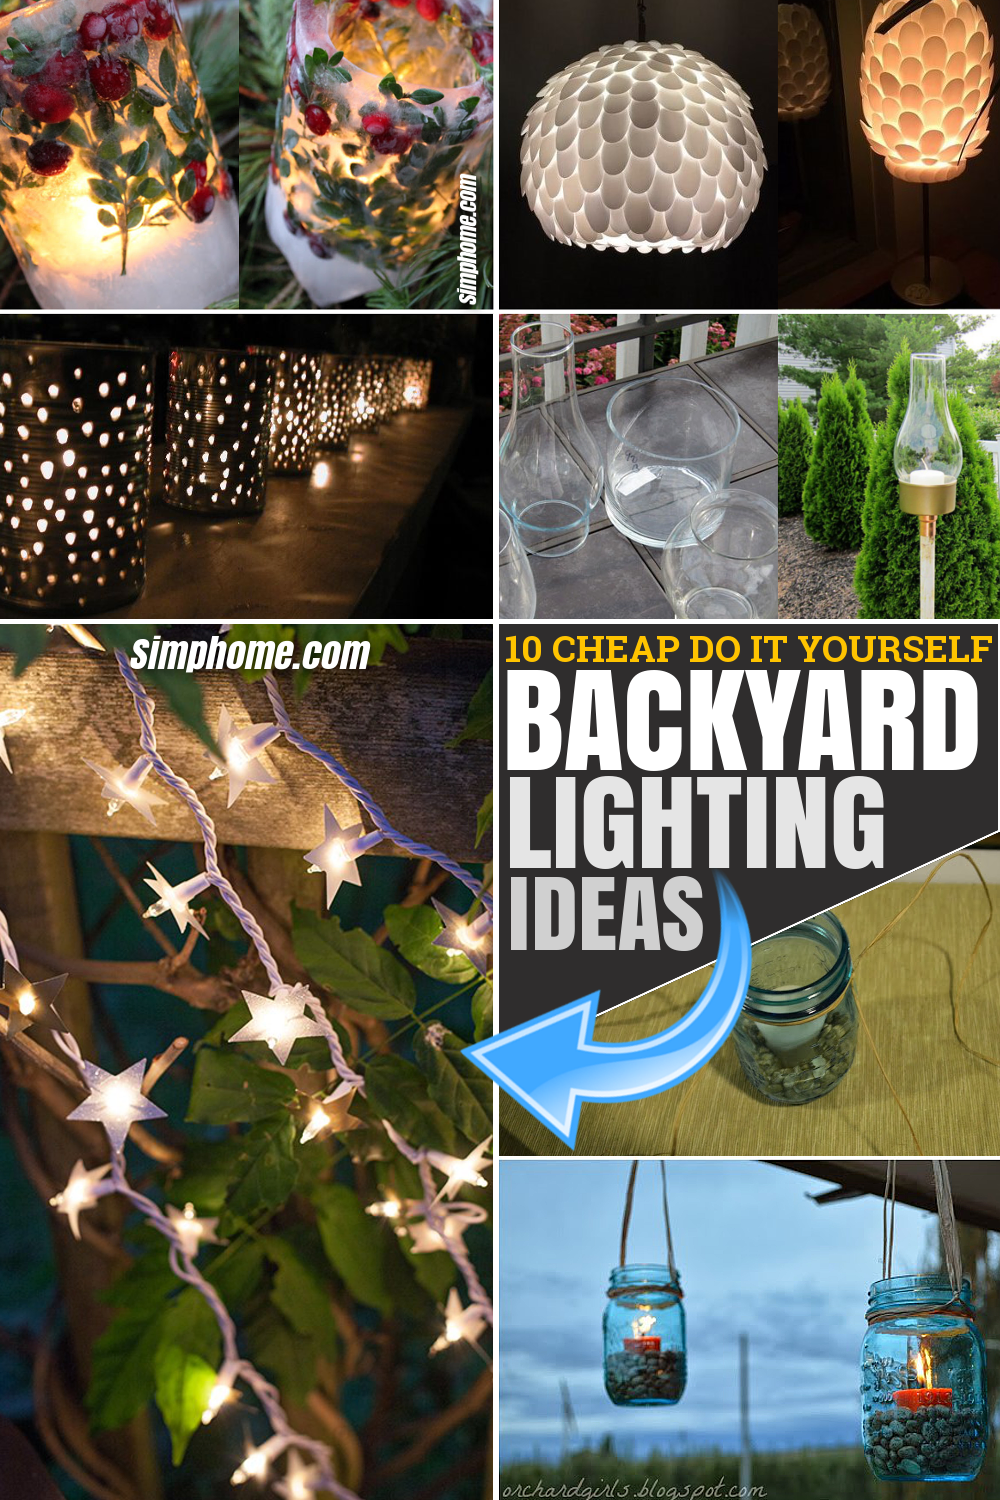 10 Cheap DIY Backyard Lighting Ideas via SIMPHOME.COM Pinterest Featured Image